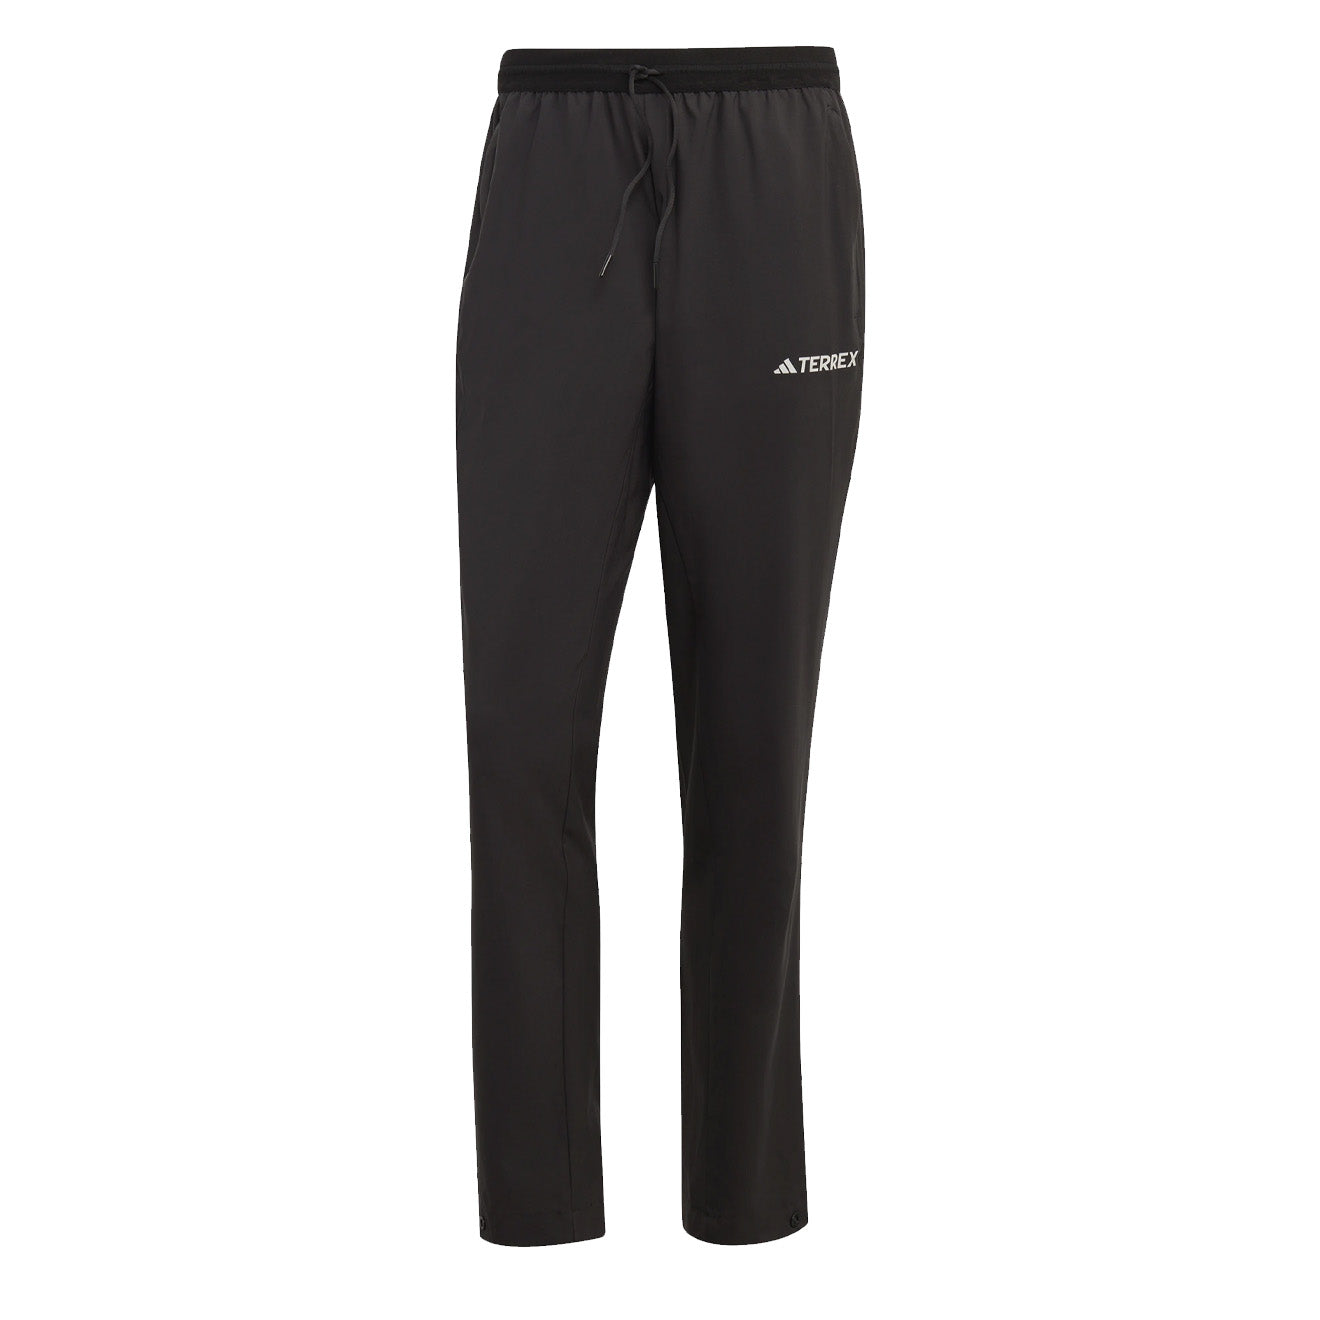 Adidas Terrex Liteflex Pants P b Black | The Sporting Lodge